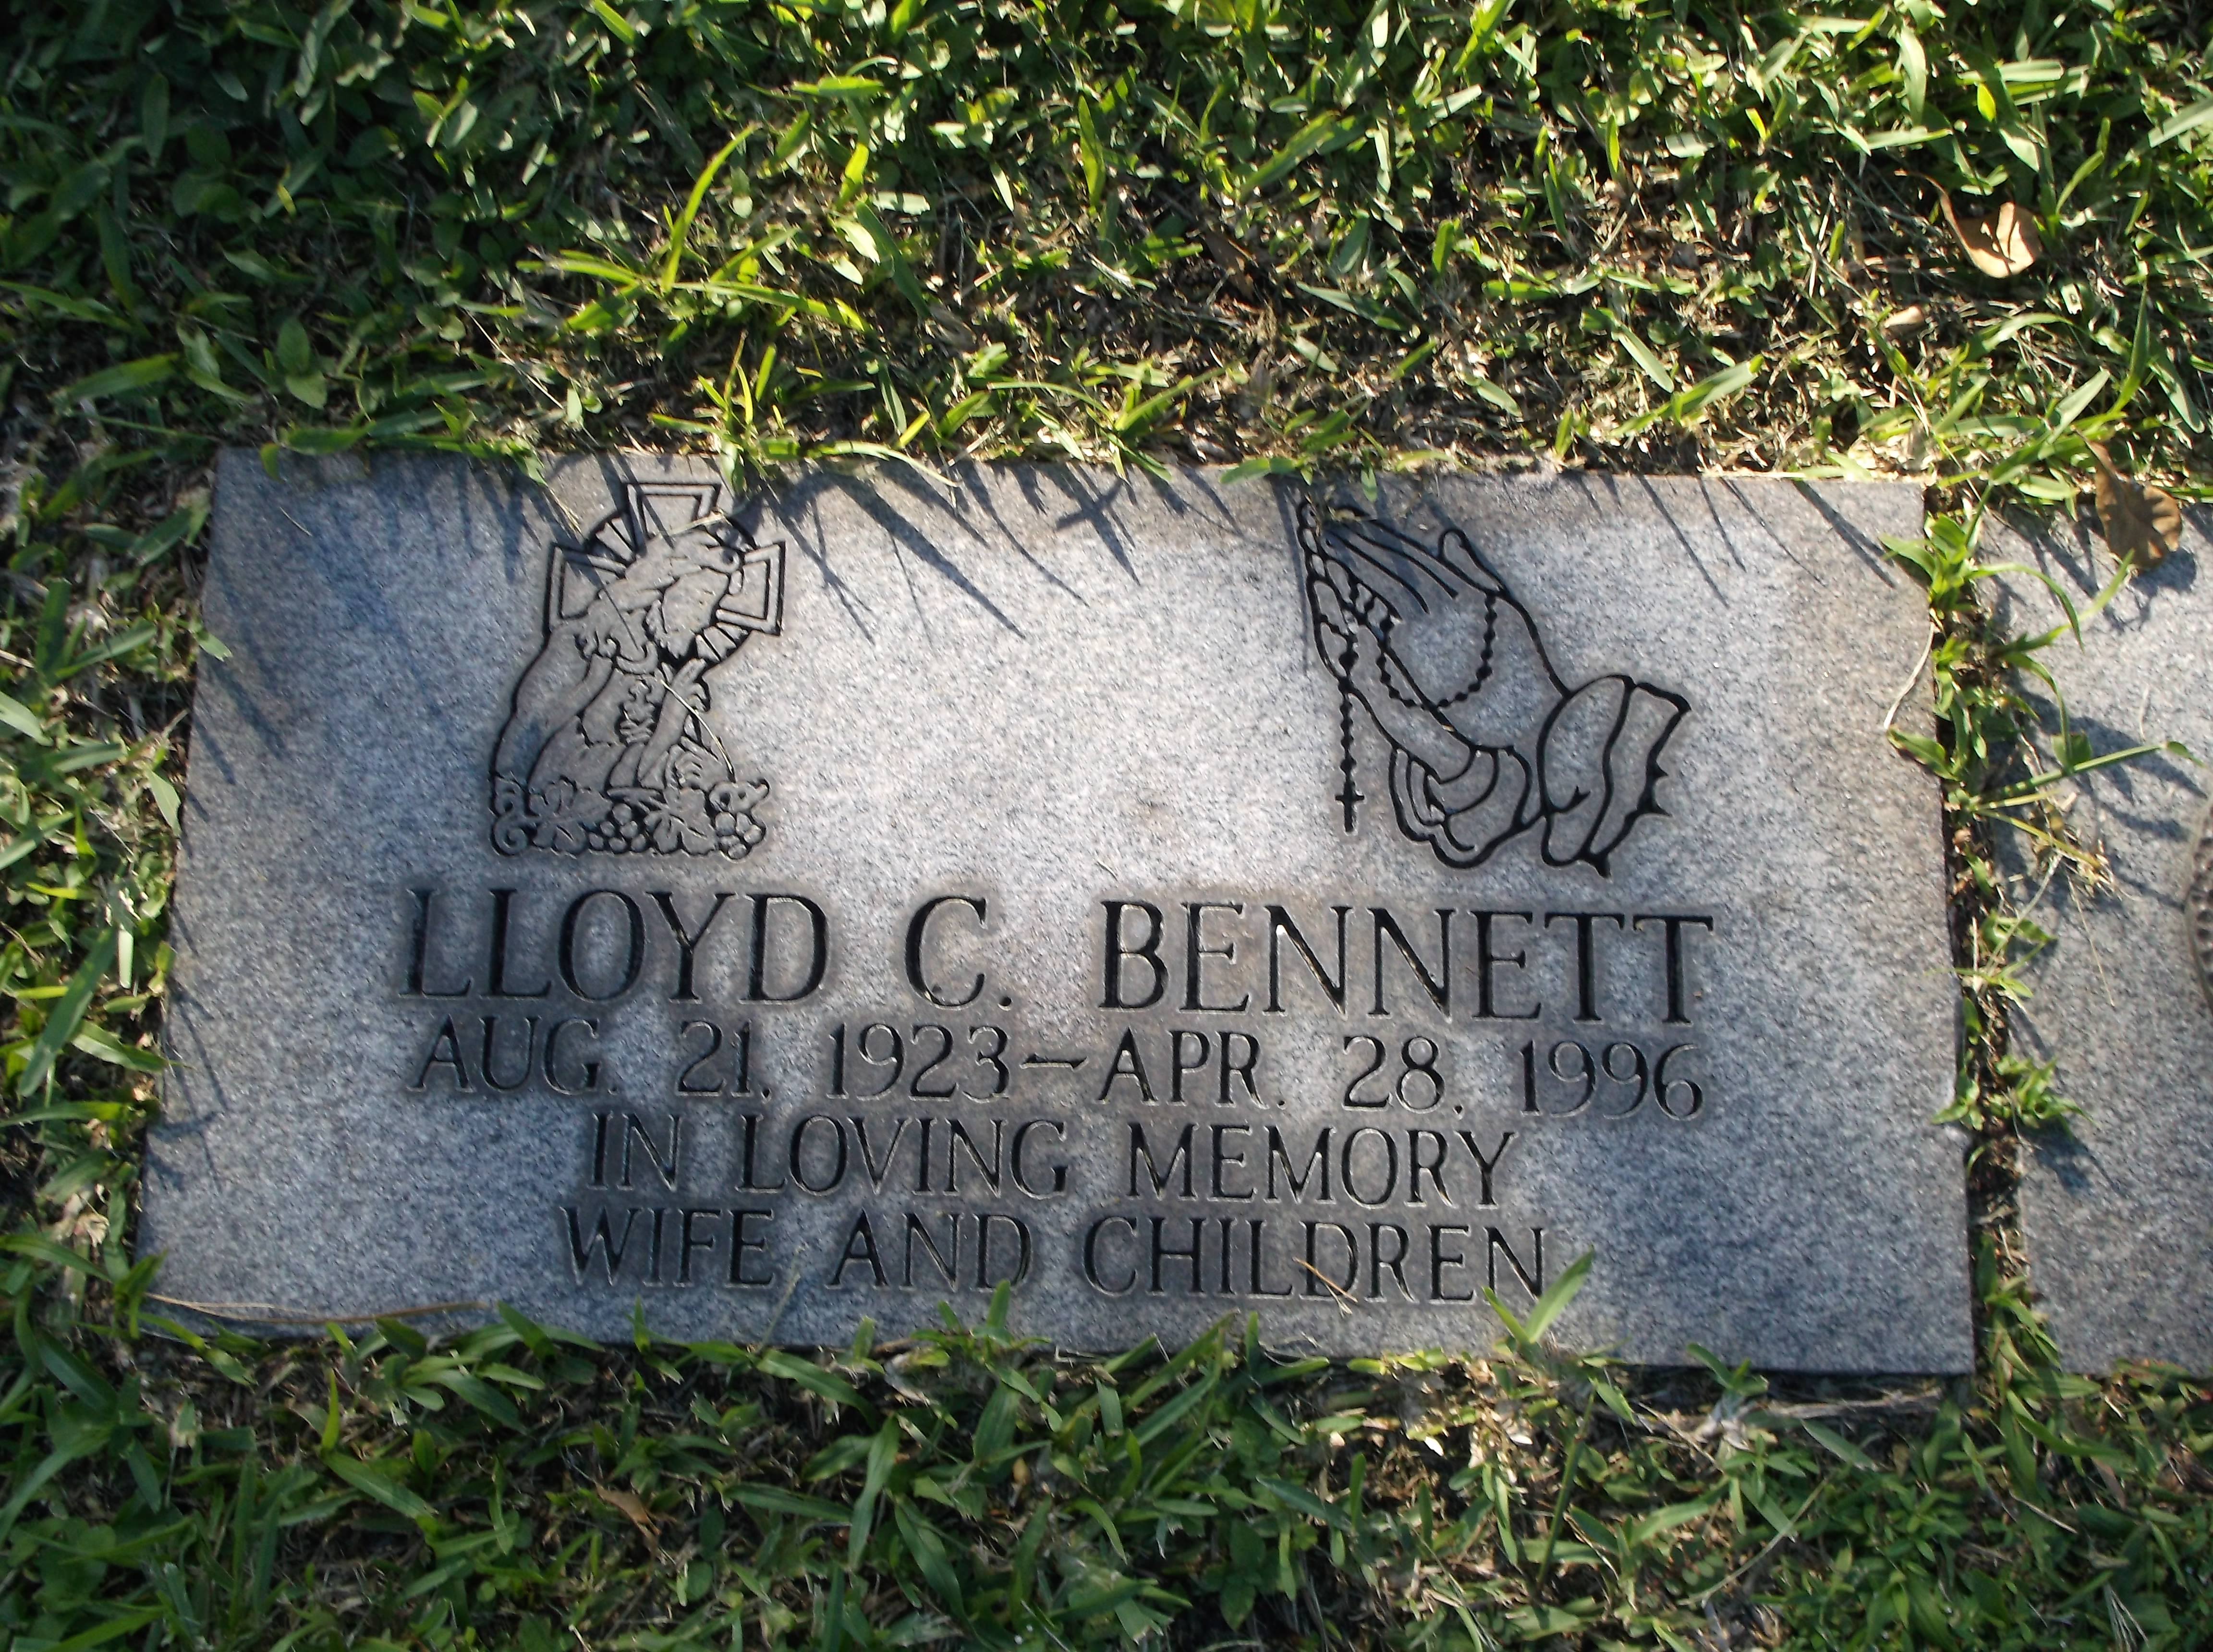 Lloyd C Bennett